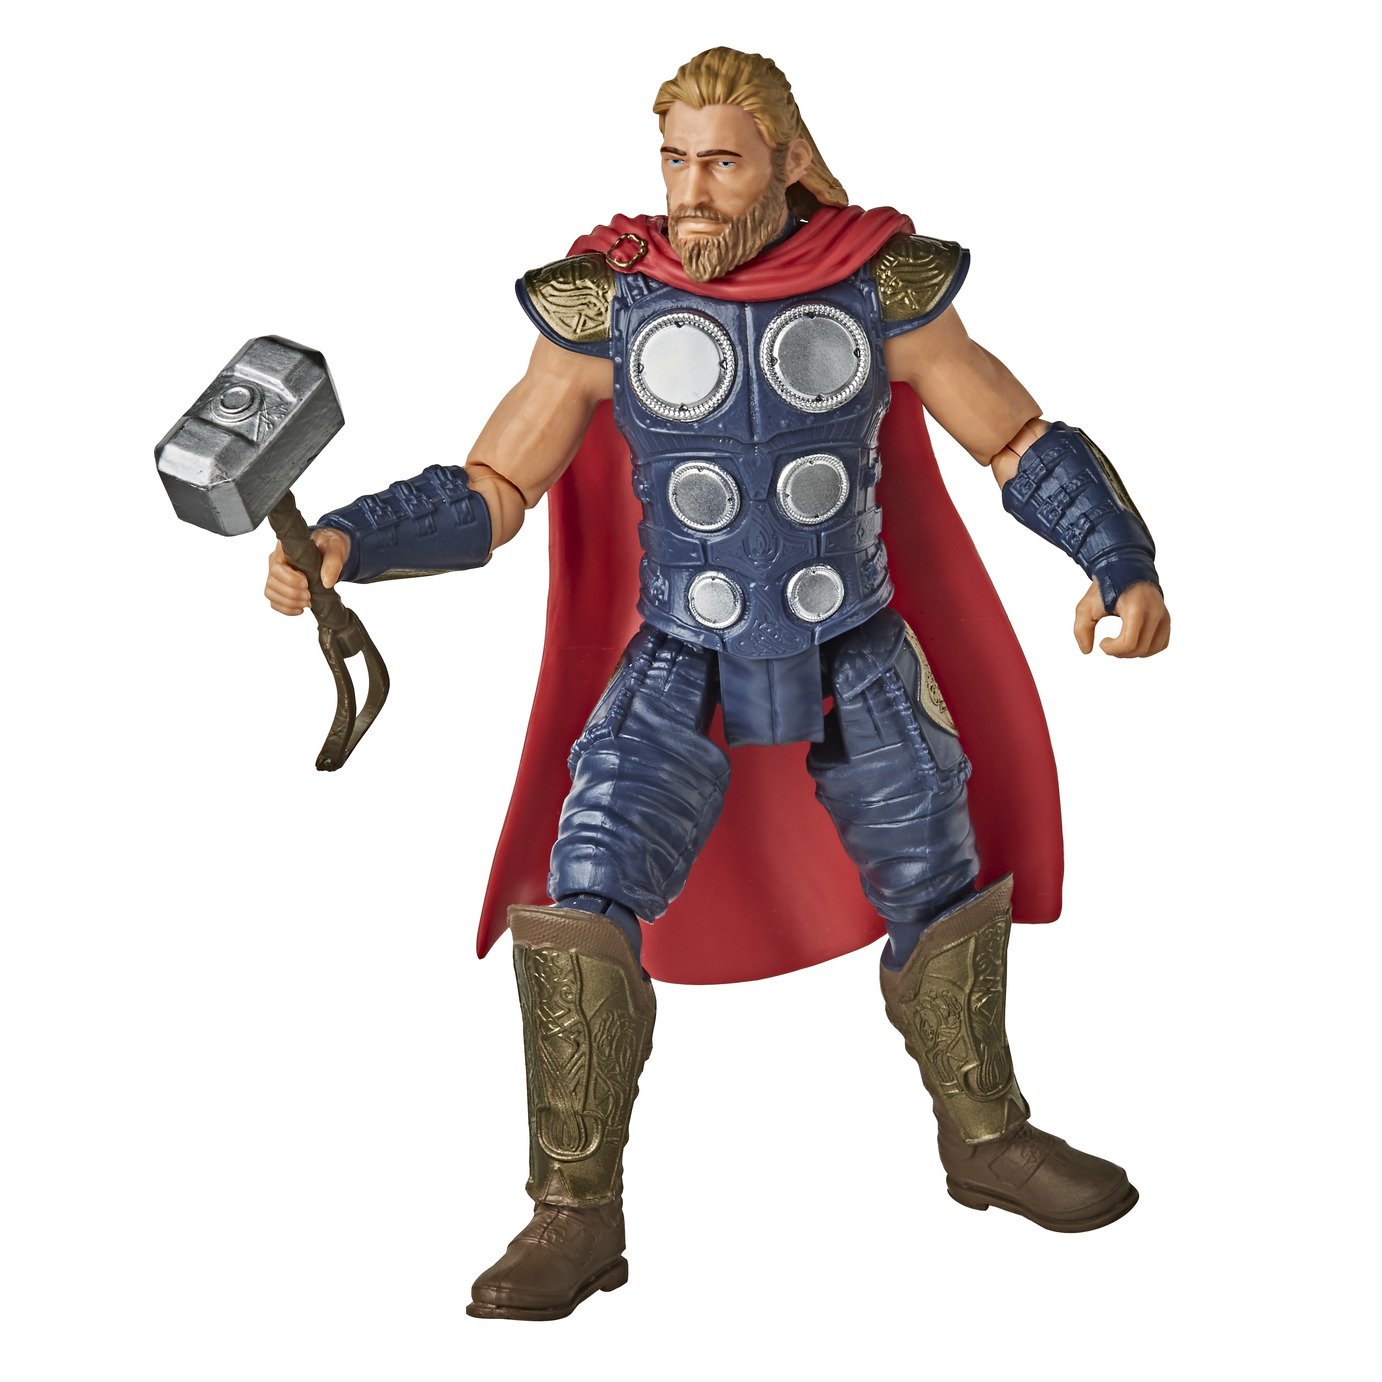 Hasbro Marvel Gamerverse Thor Review